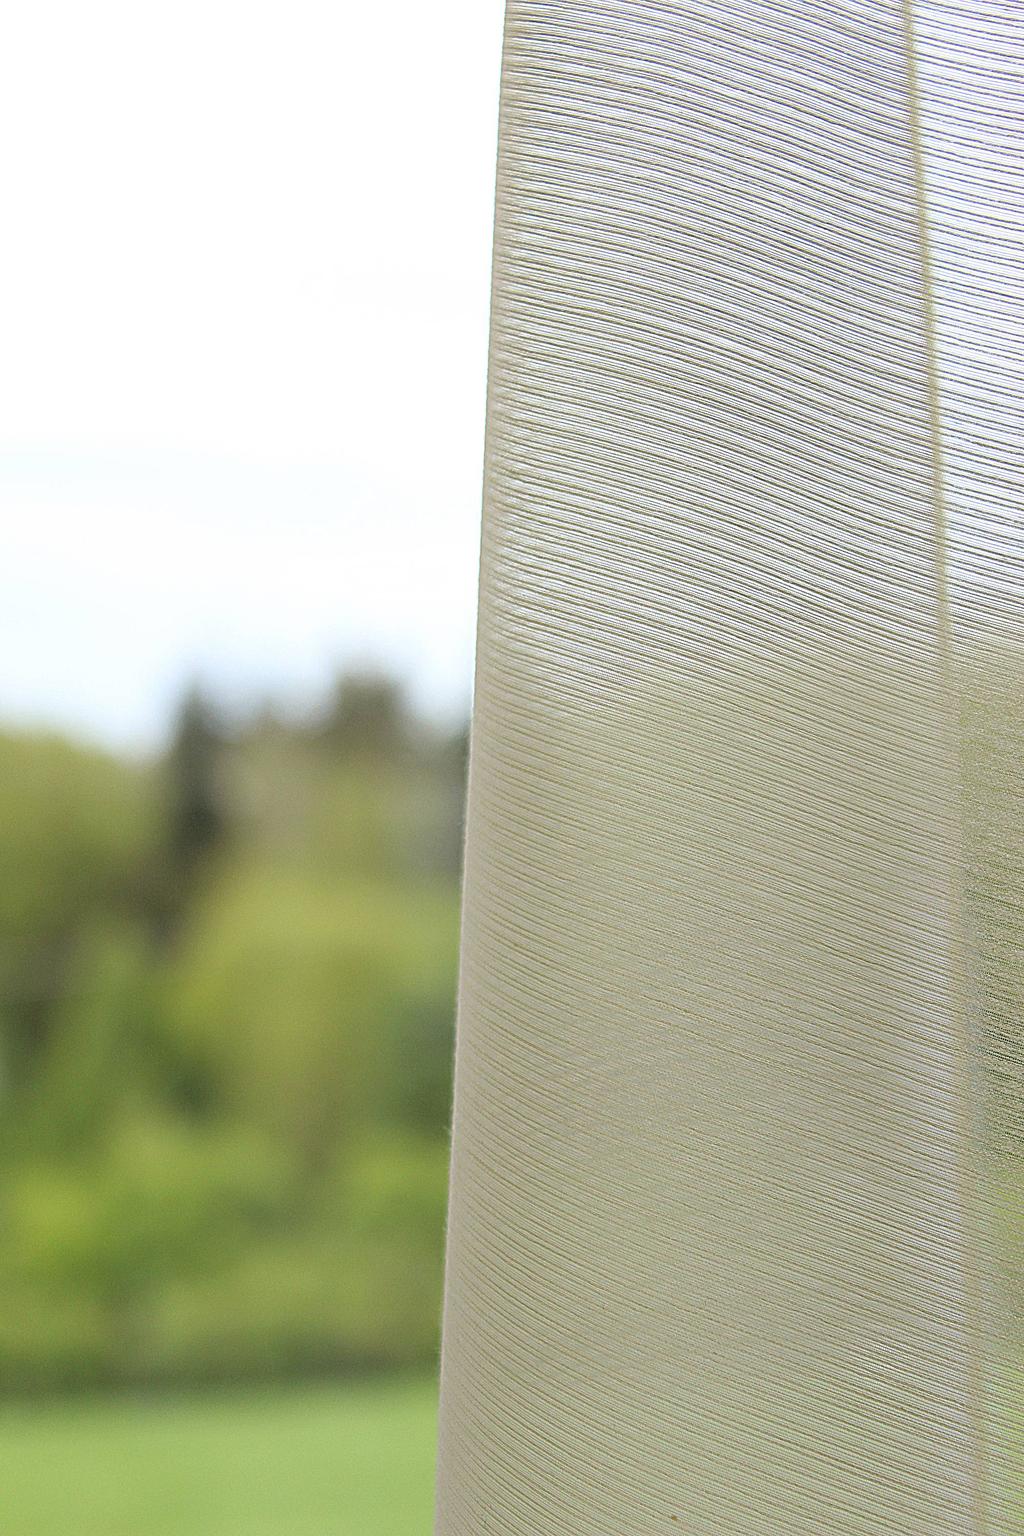 Material: 100% Flameretardant polyester (Trevira CS) Fabric width: